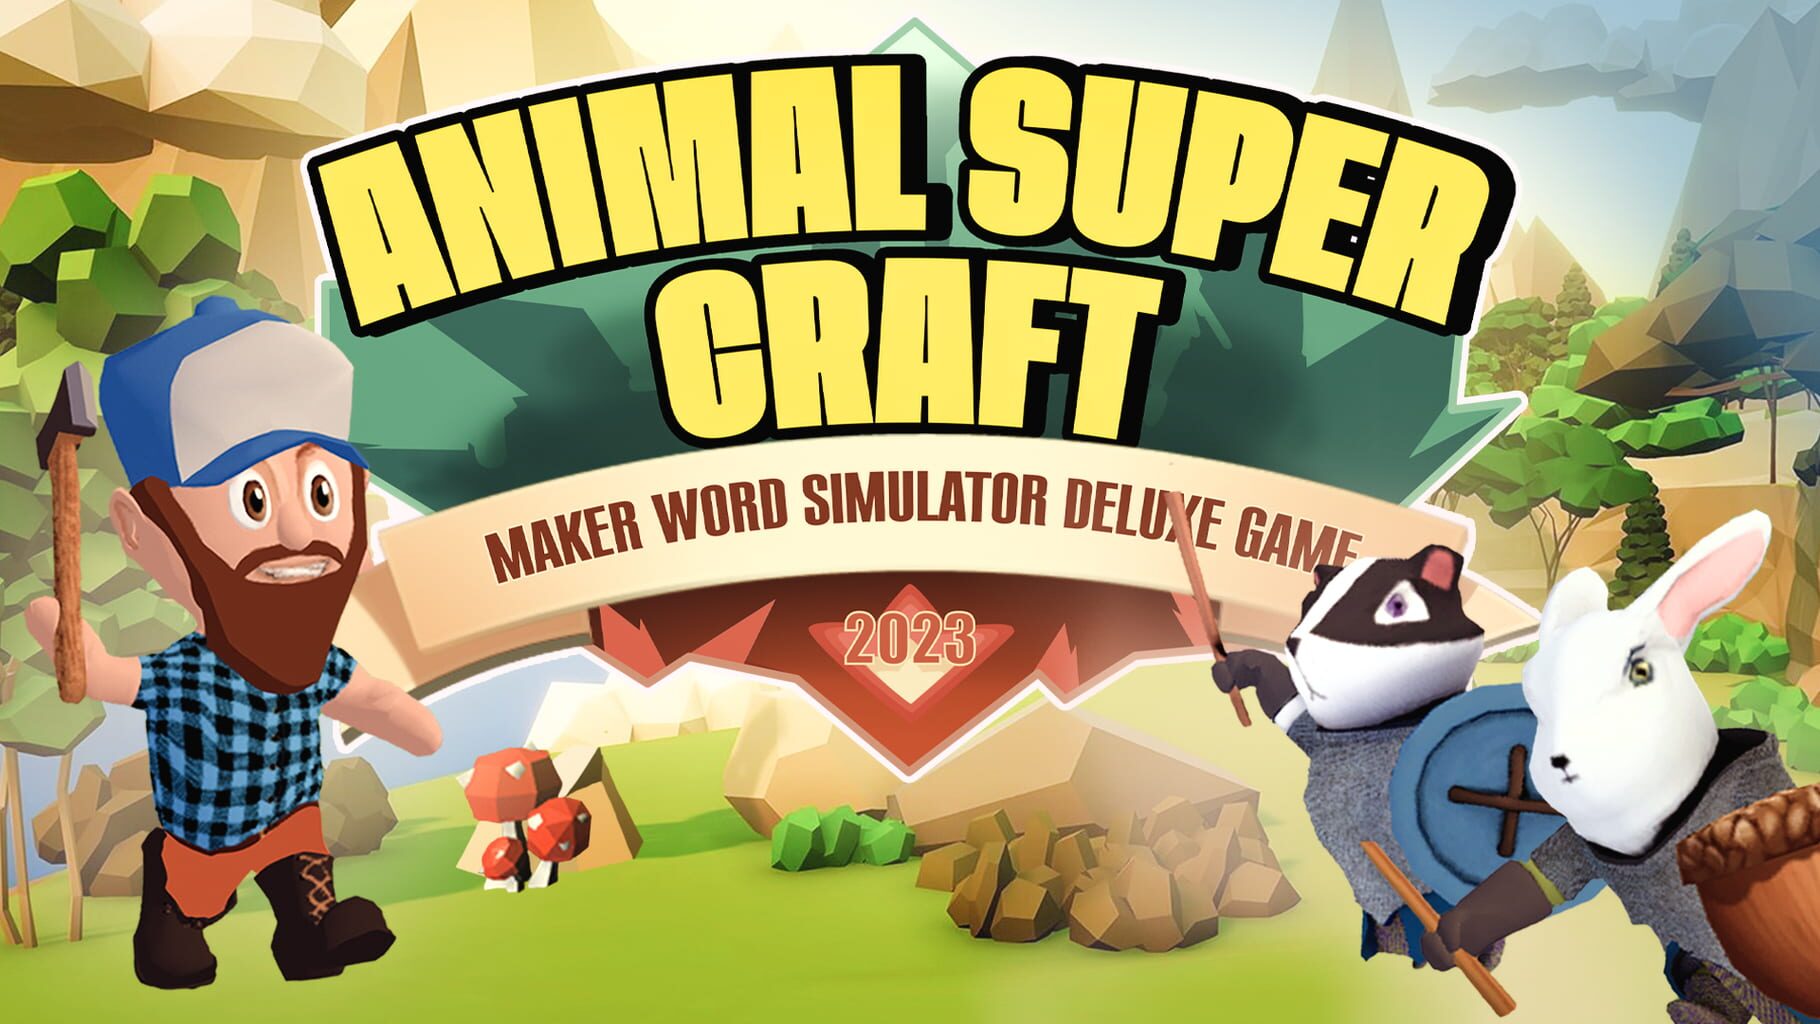 Animal Super Craft: Maker Word Simulator Deluxe Game 2023 artwork